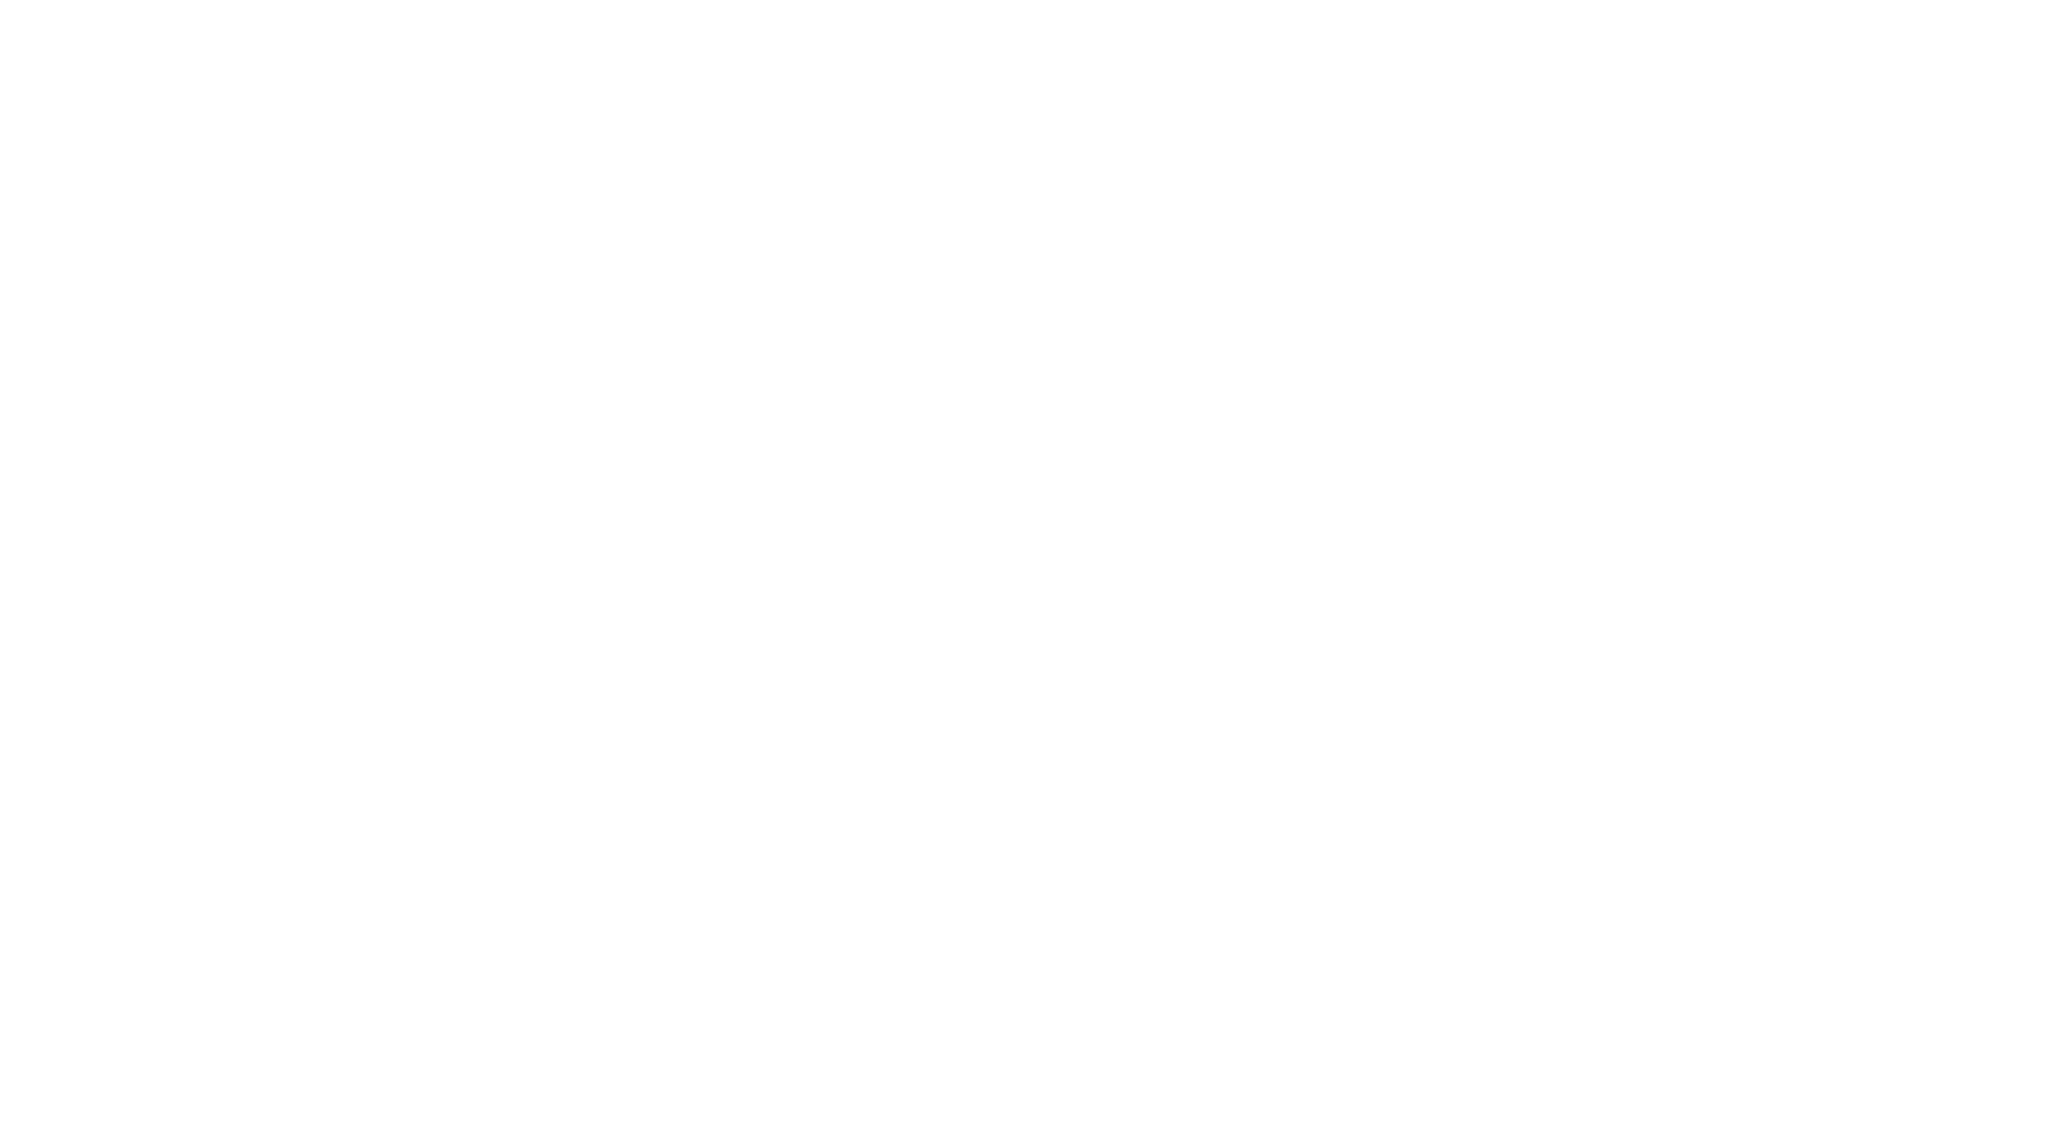 Esport Racing